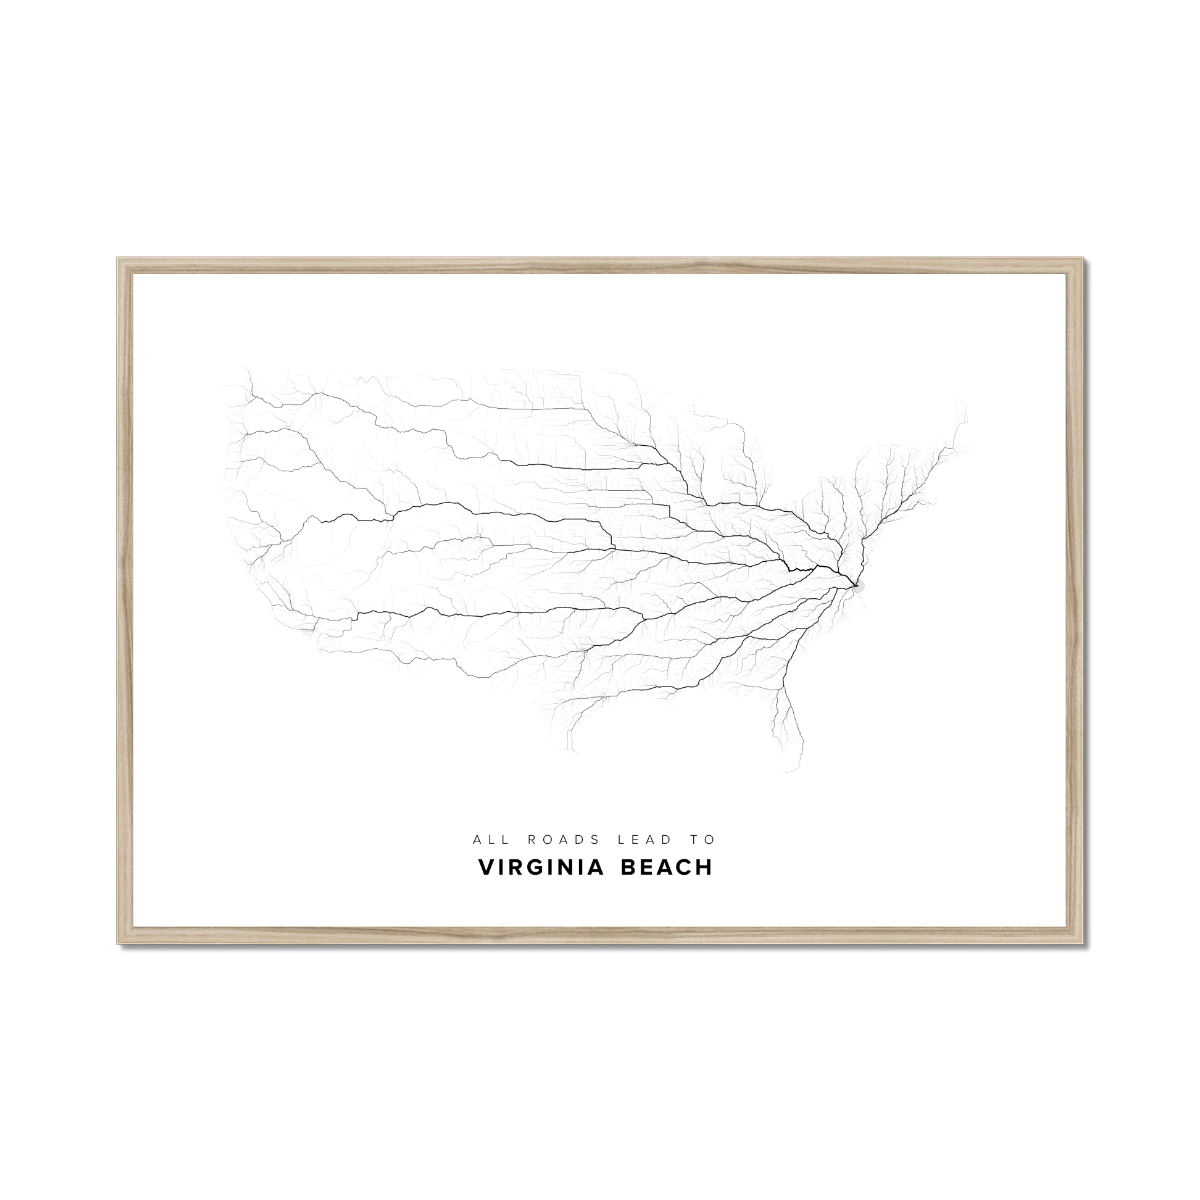 All roads lead to Virginia Beach (United States of America) Fine Art Map Print